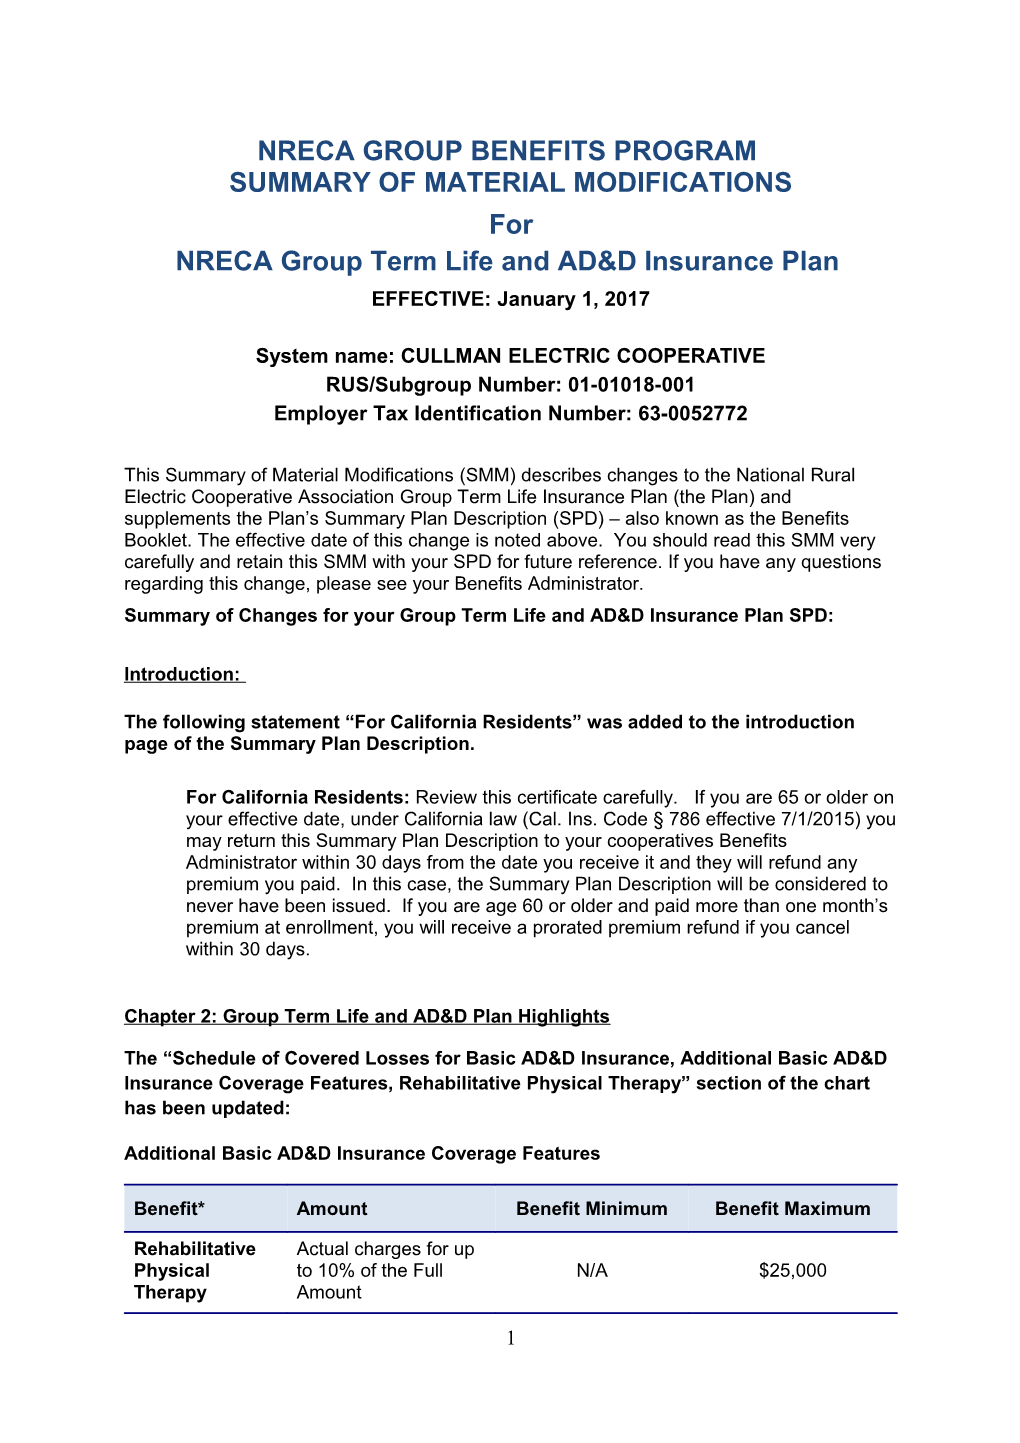 Nreca Group Benefits Program Summary of Material Modifications